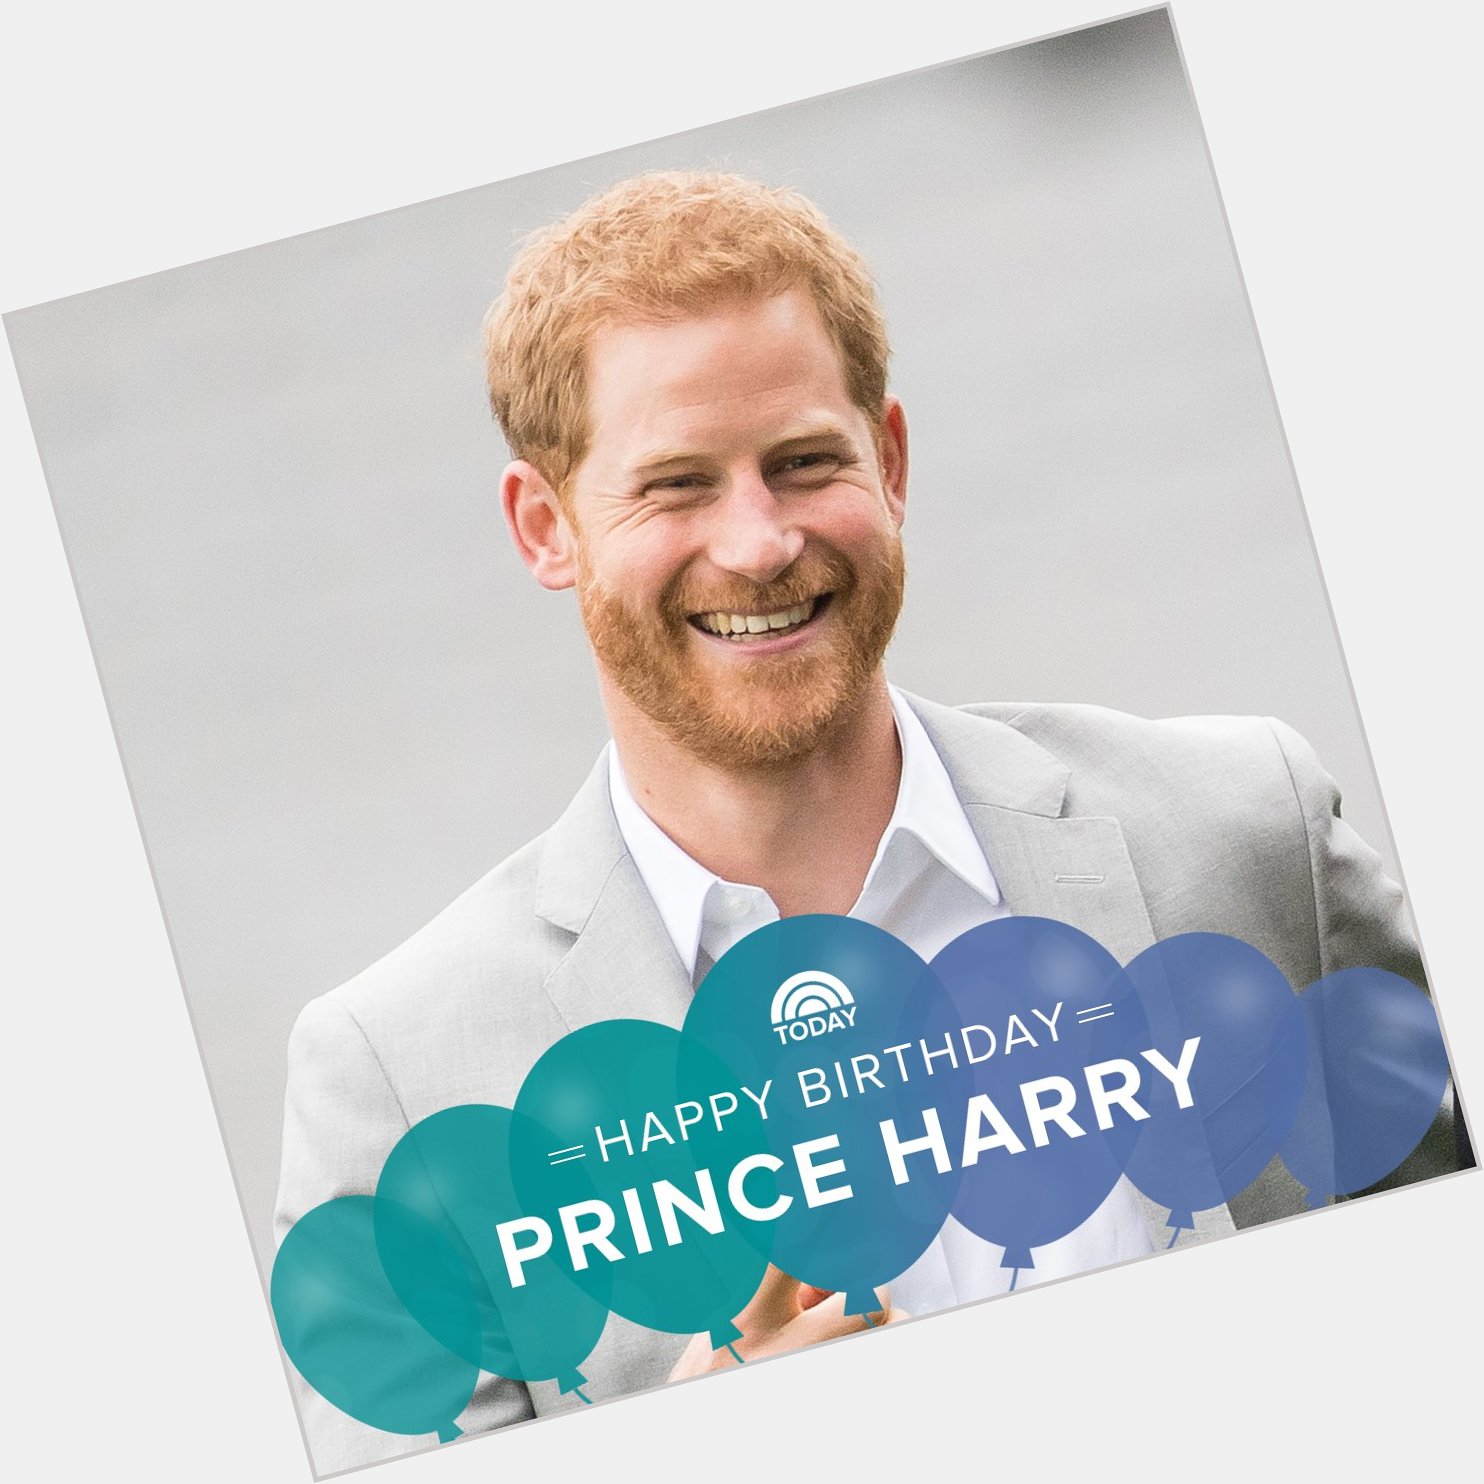 Happy birthday, Prince Harry! 